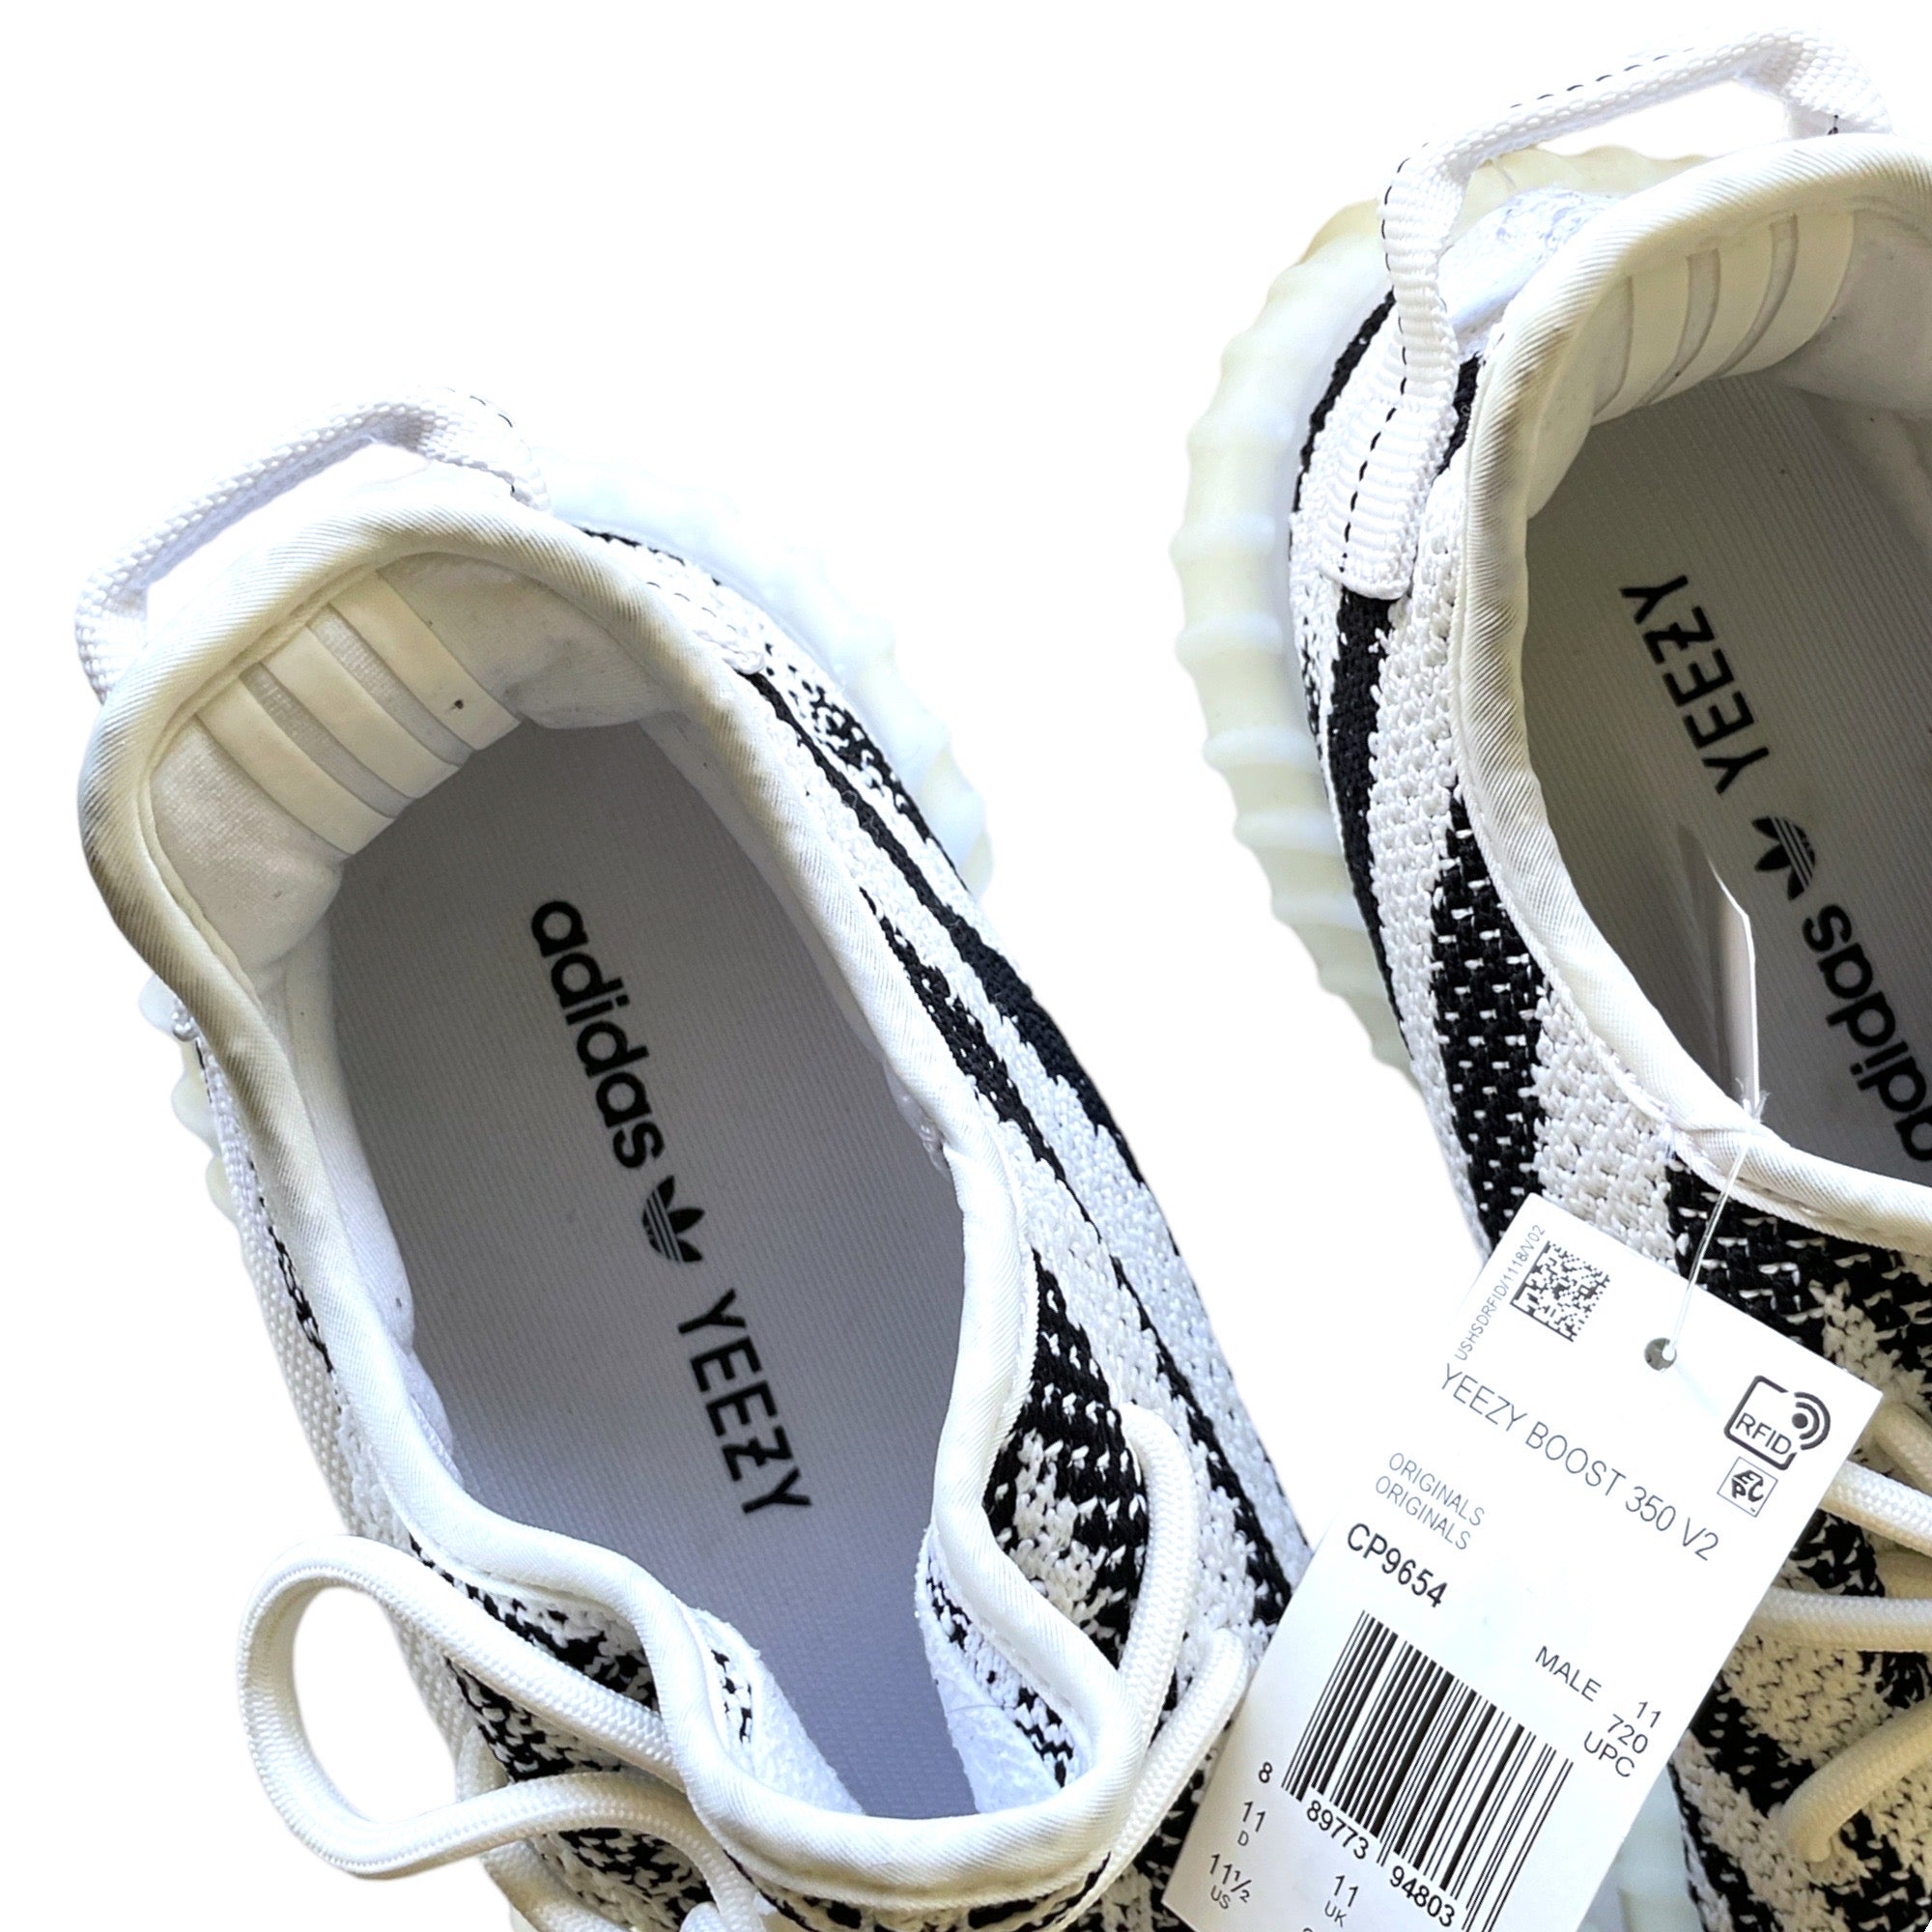 Yeezy Boost 350 V2 "Zebra - 2018/2019 Release" Sneakers